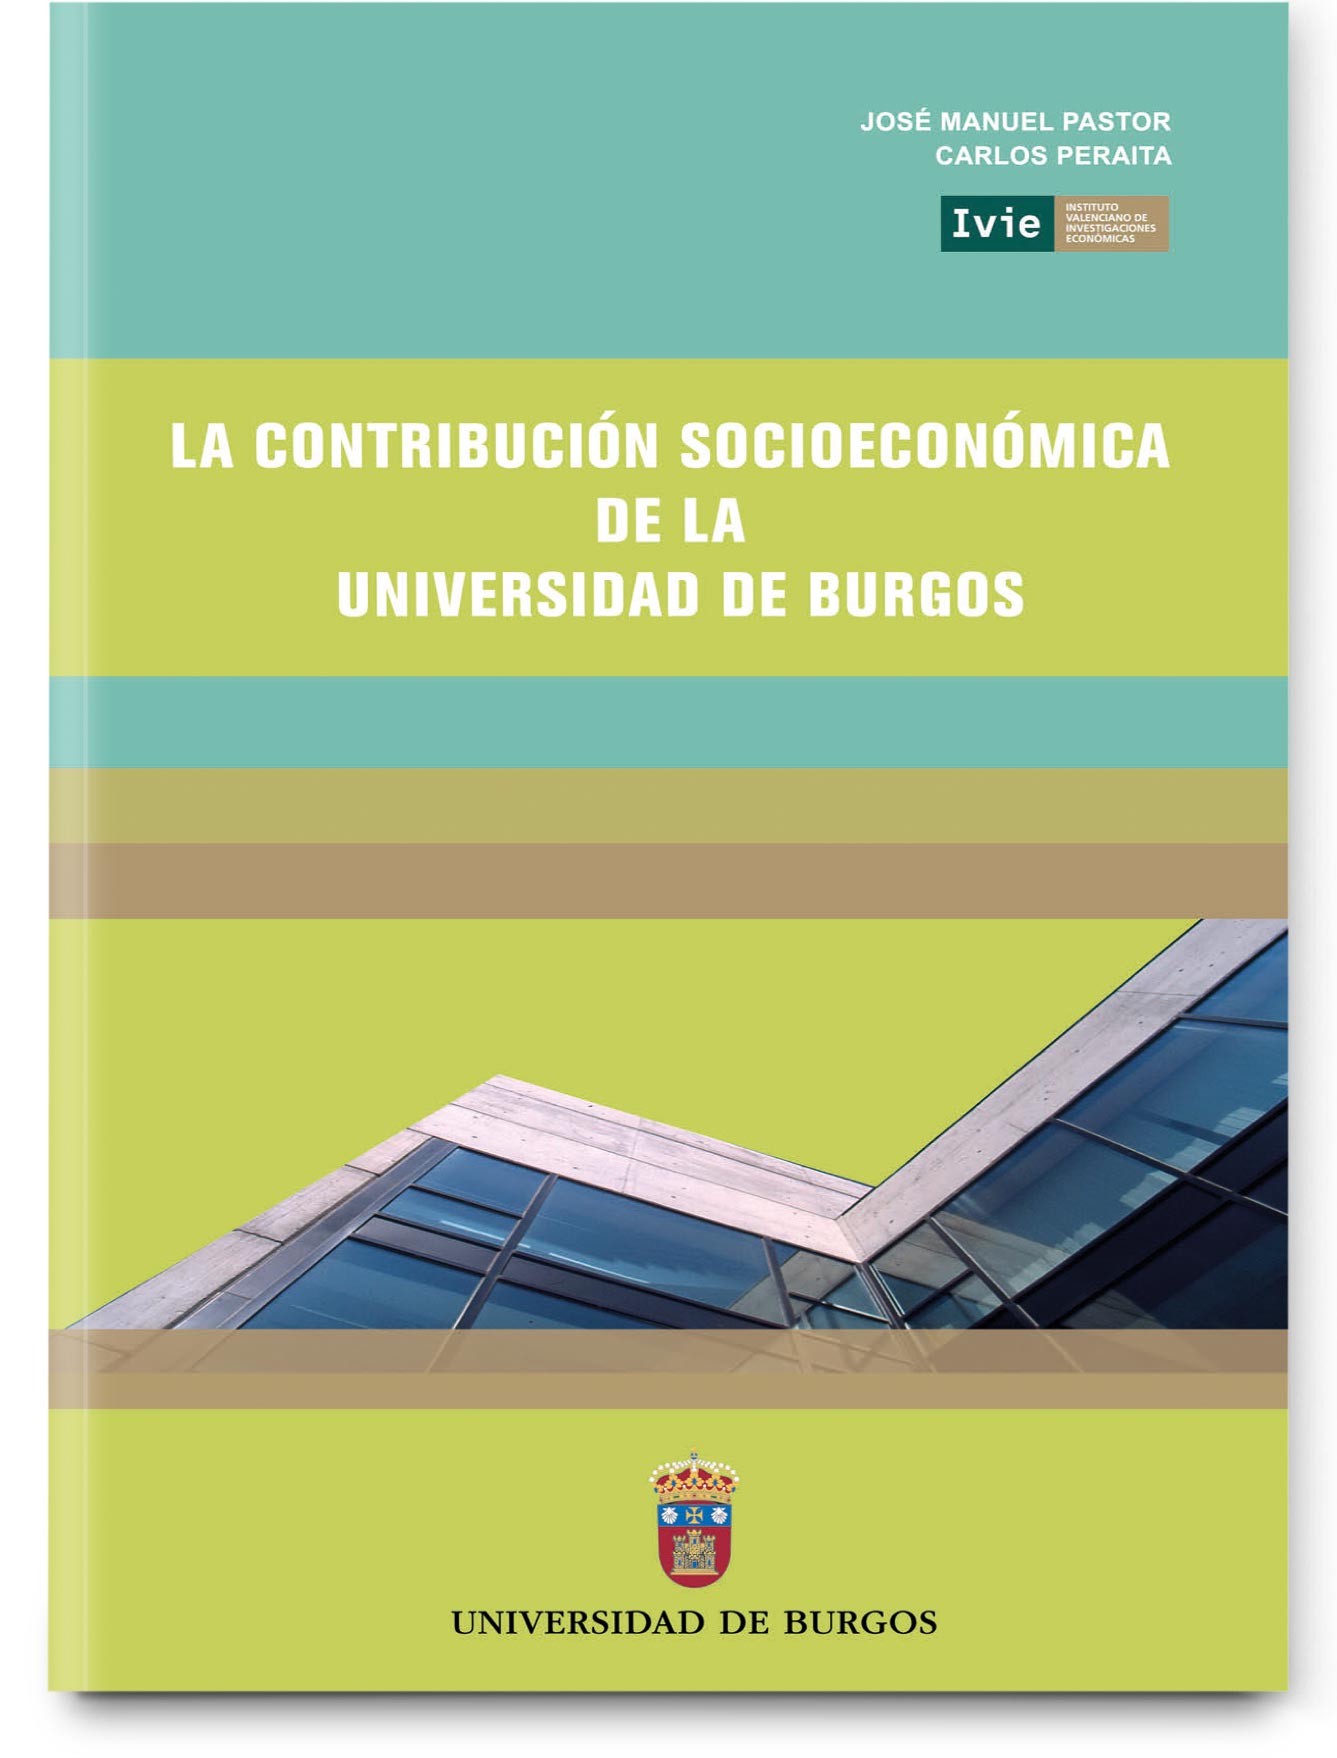 The socioeconomic contribution of the University of Burgos